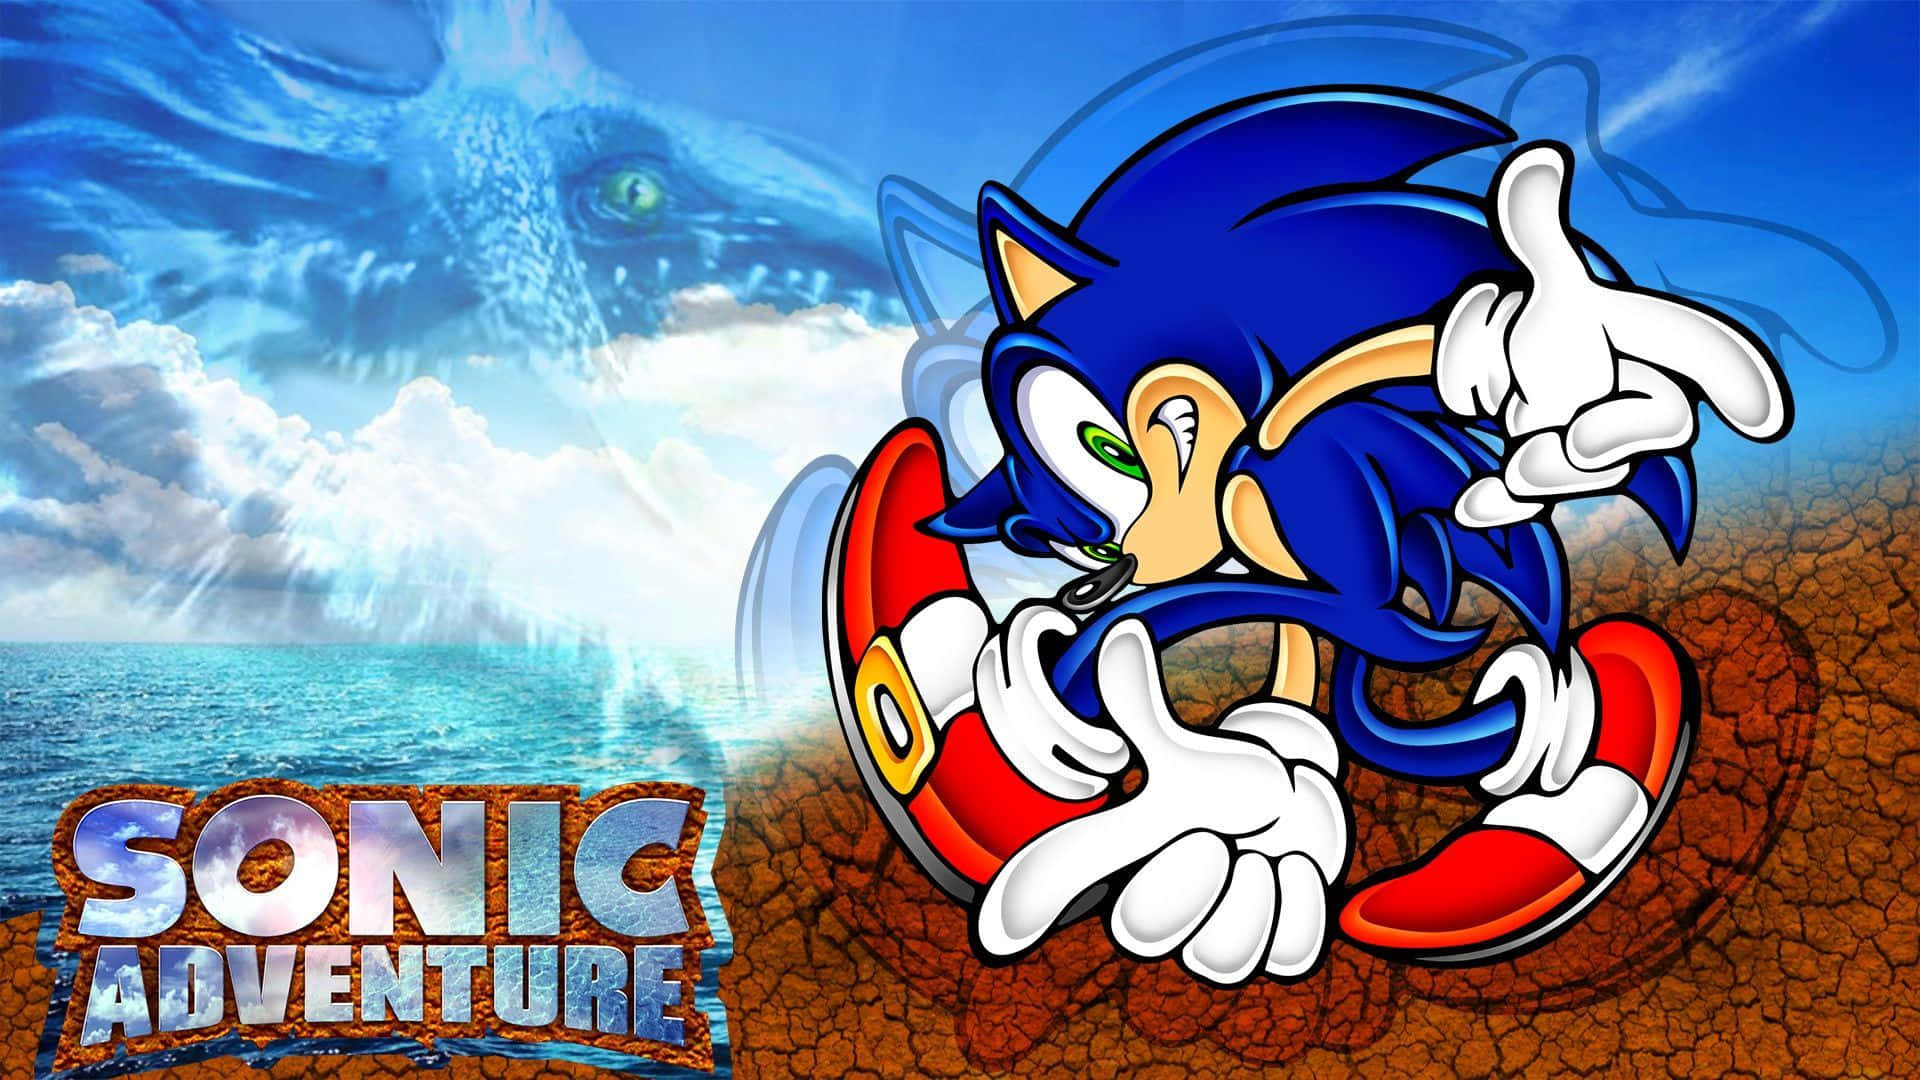 Sonic the Hedgehog Logo on Blue Background Wallpaper